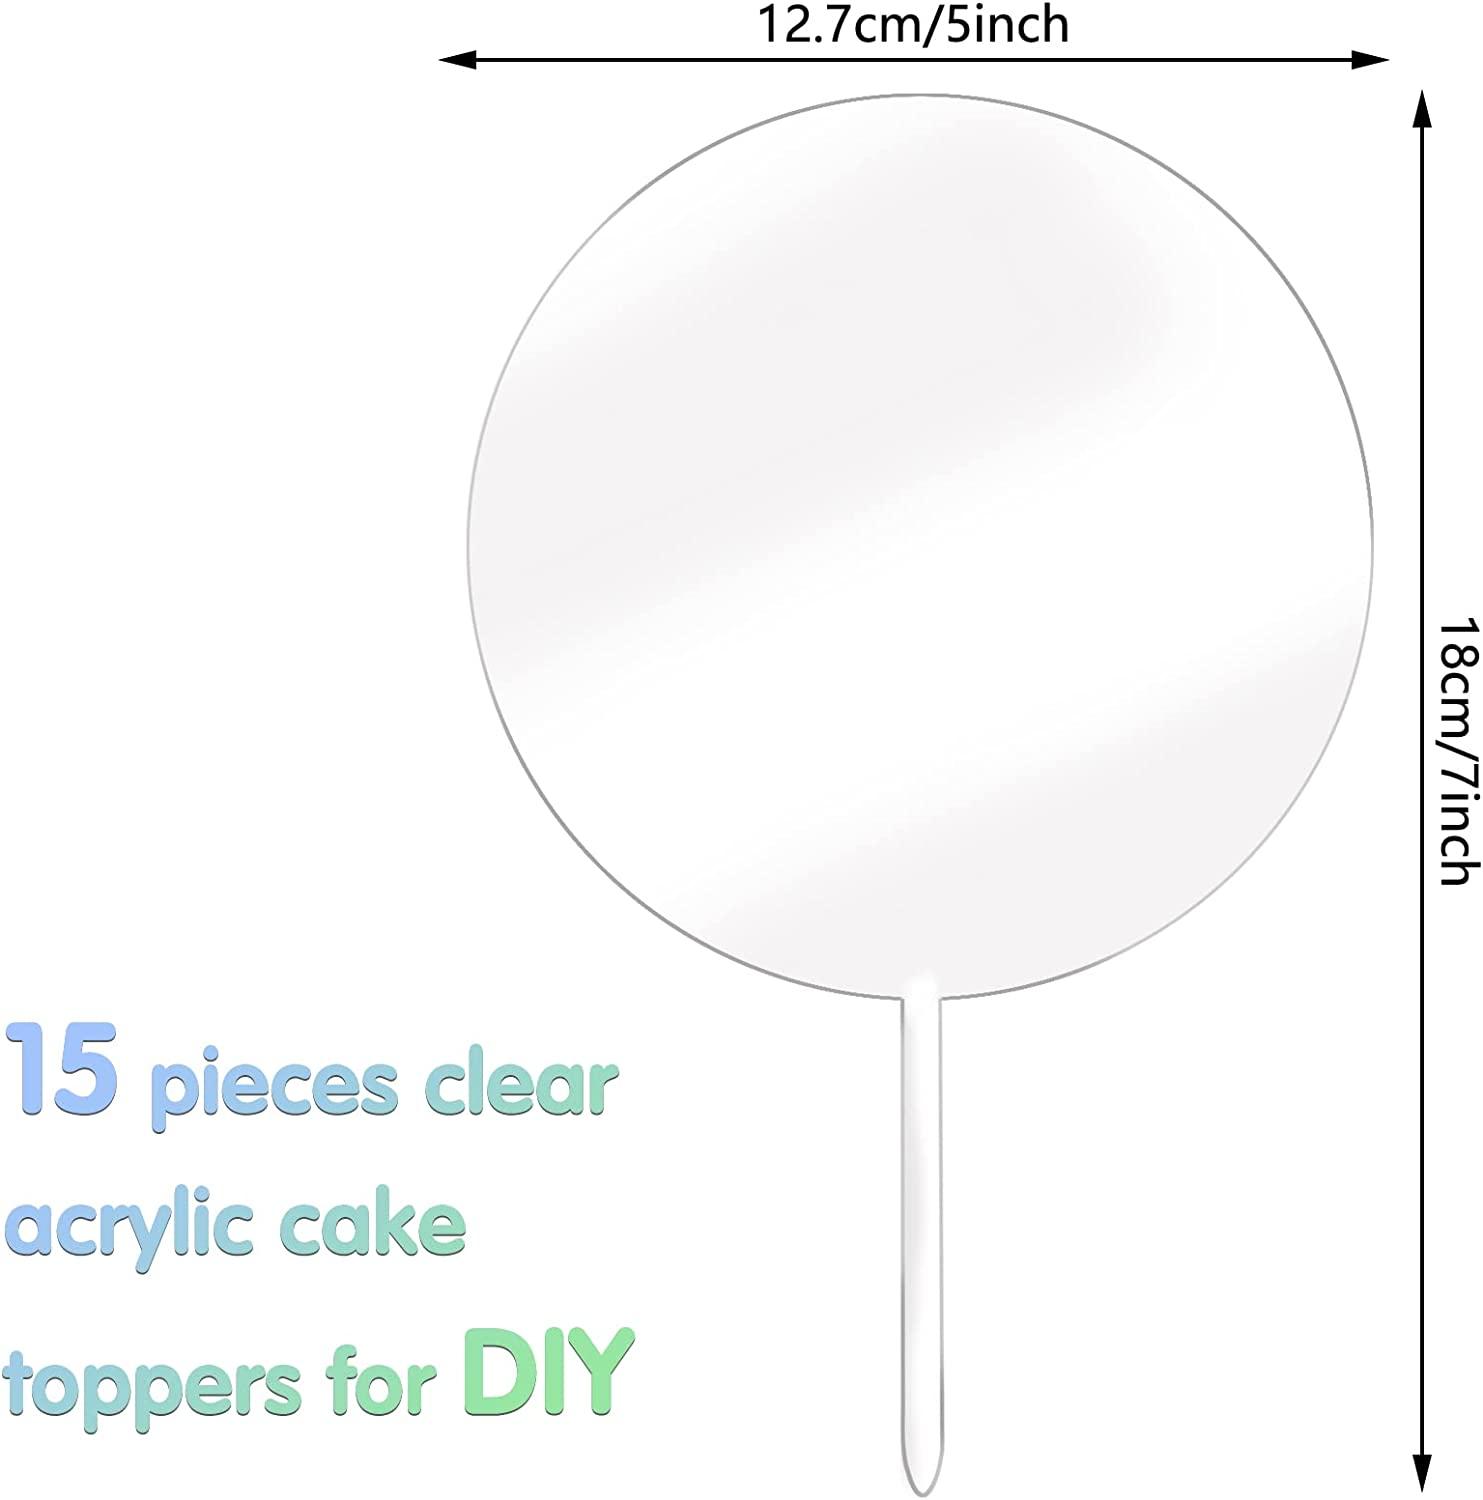 Circle Tumbler Topper Acrylic Blank